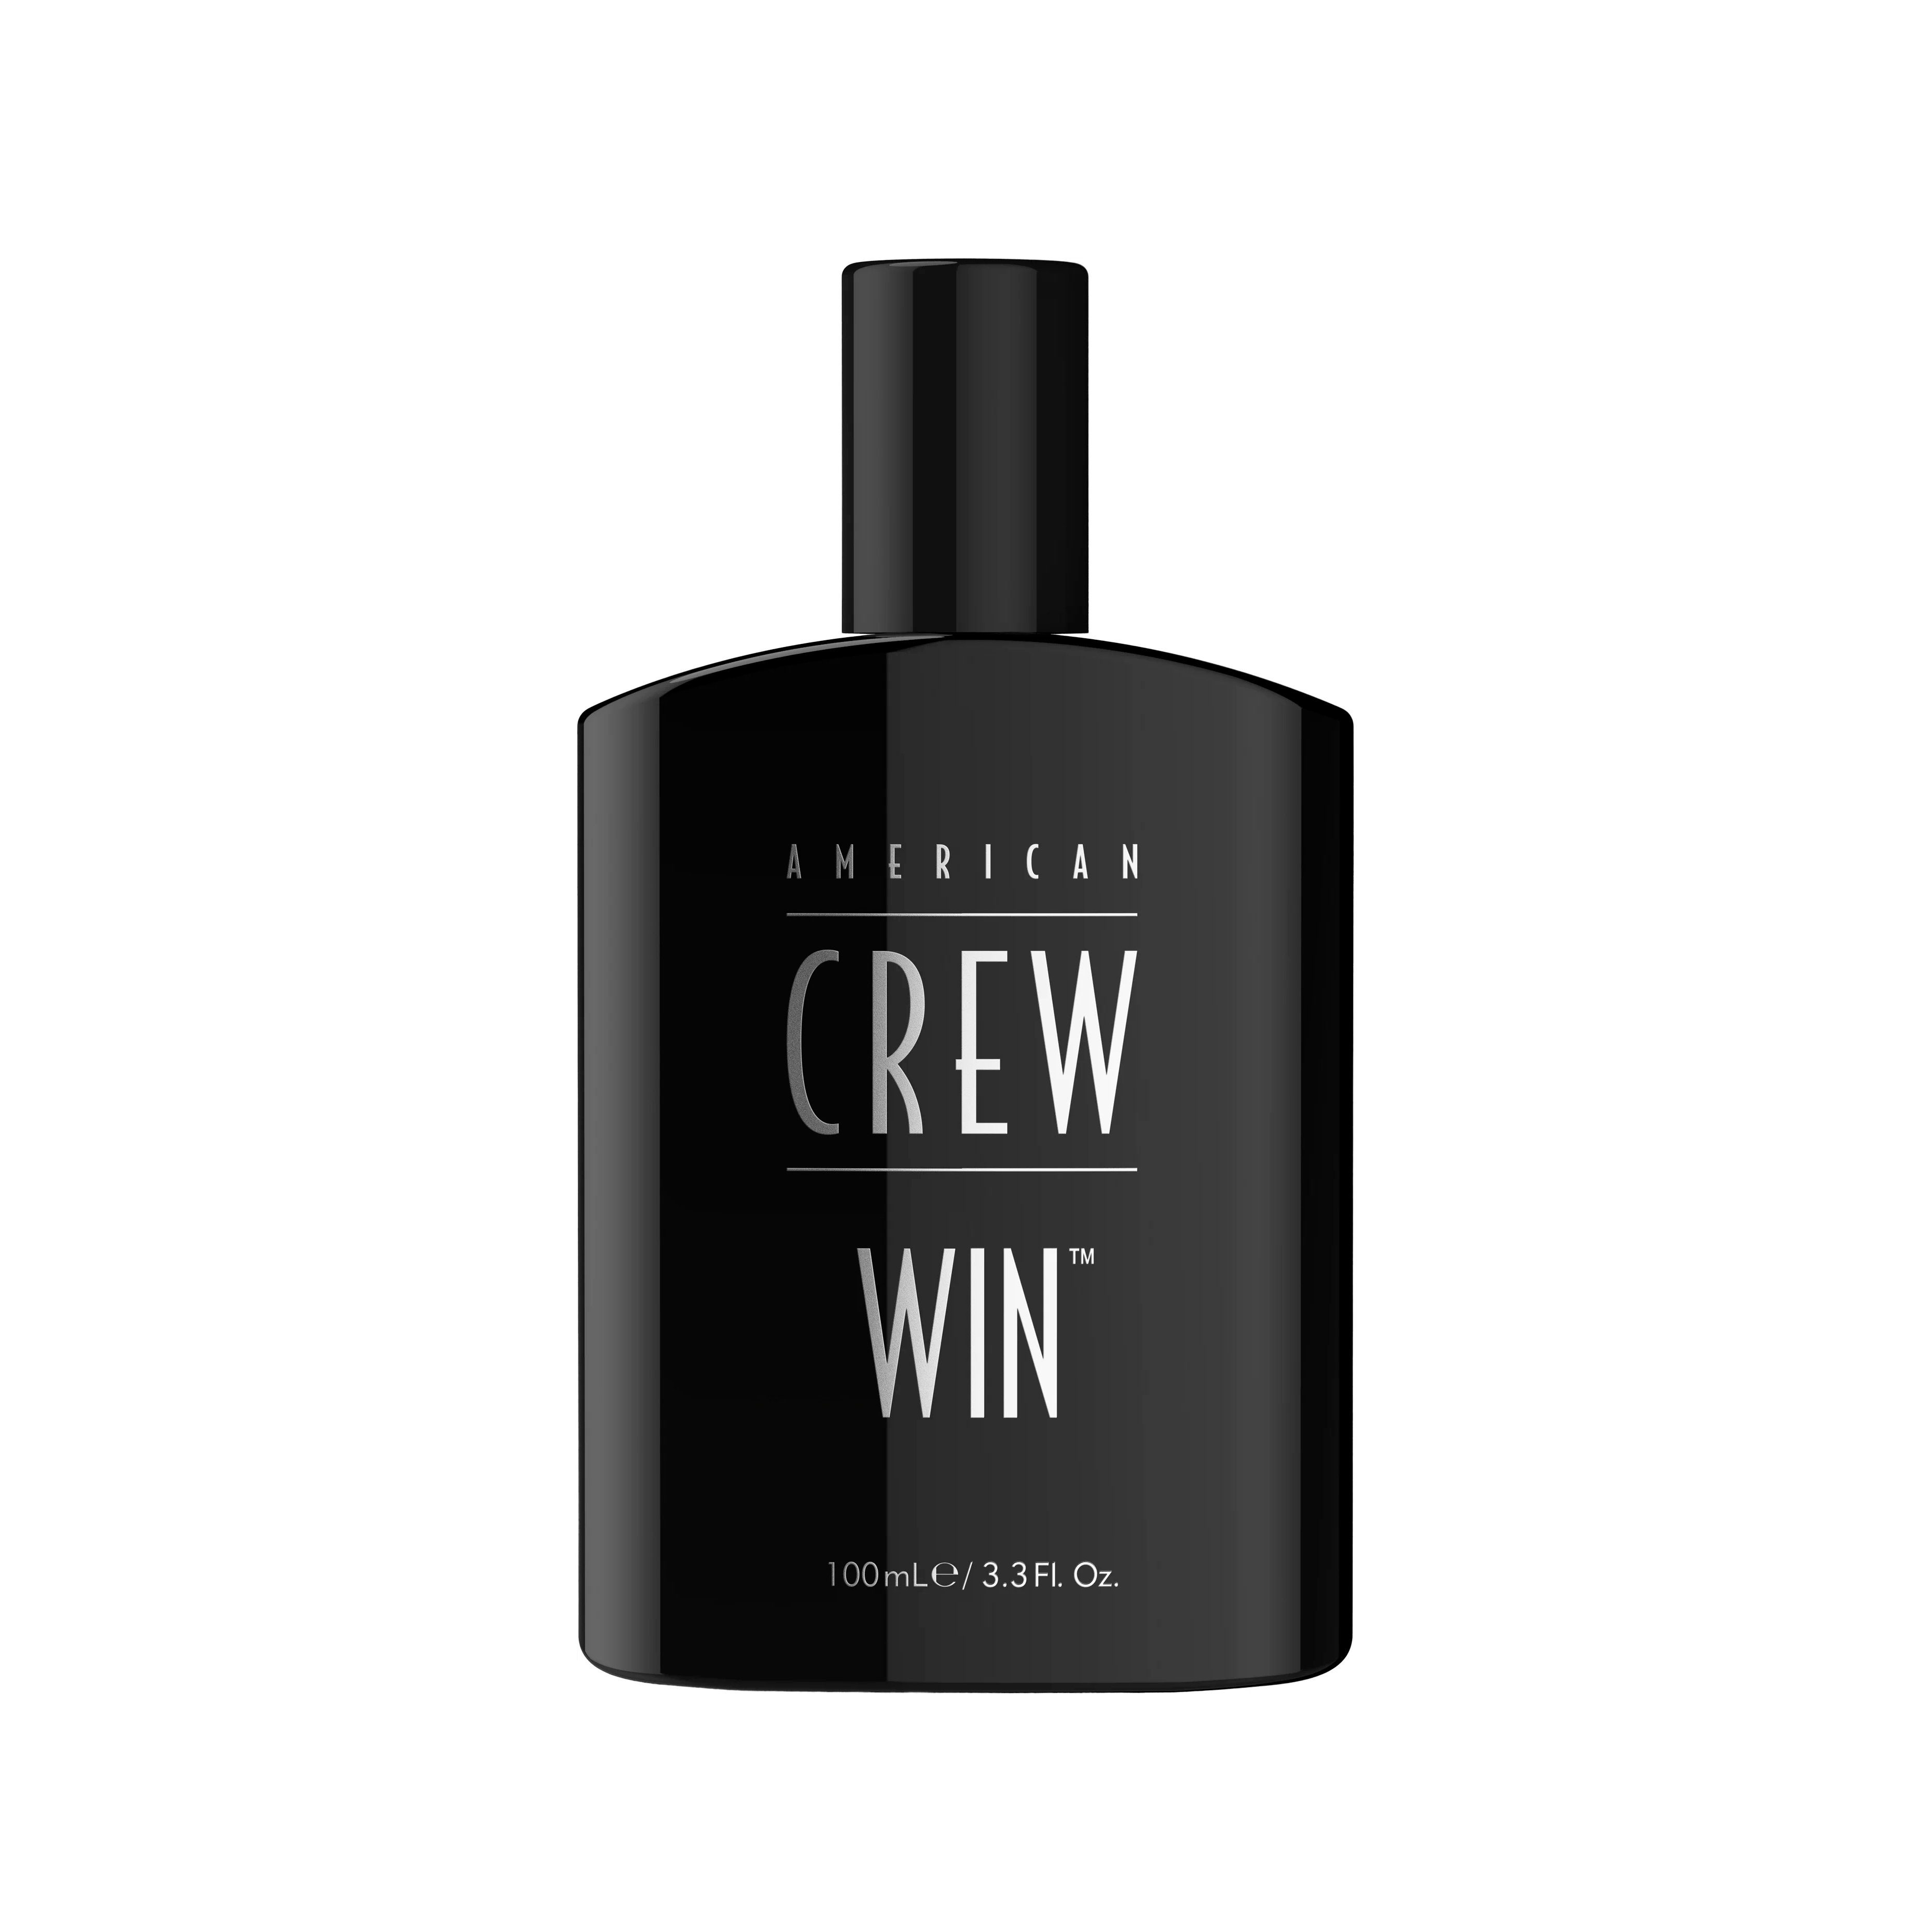 American Crew Eau 100 de ml, Him EdP, Männerduft, Win For Parfum Fragrance